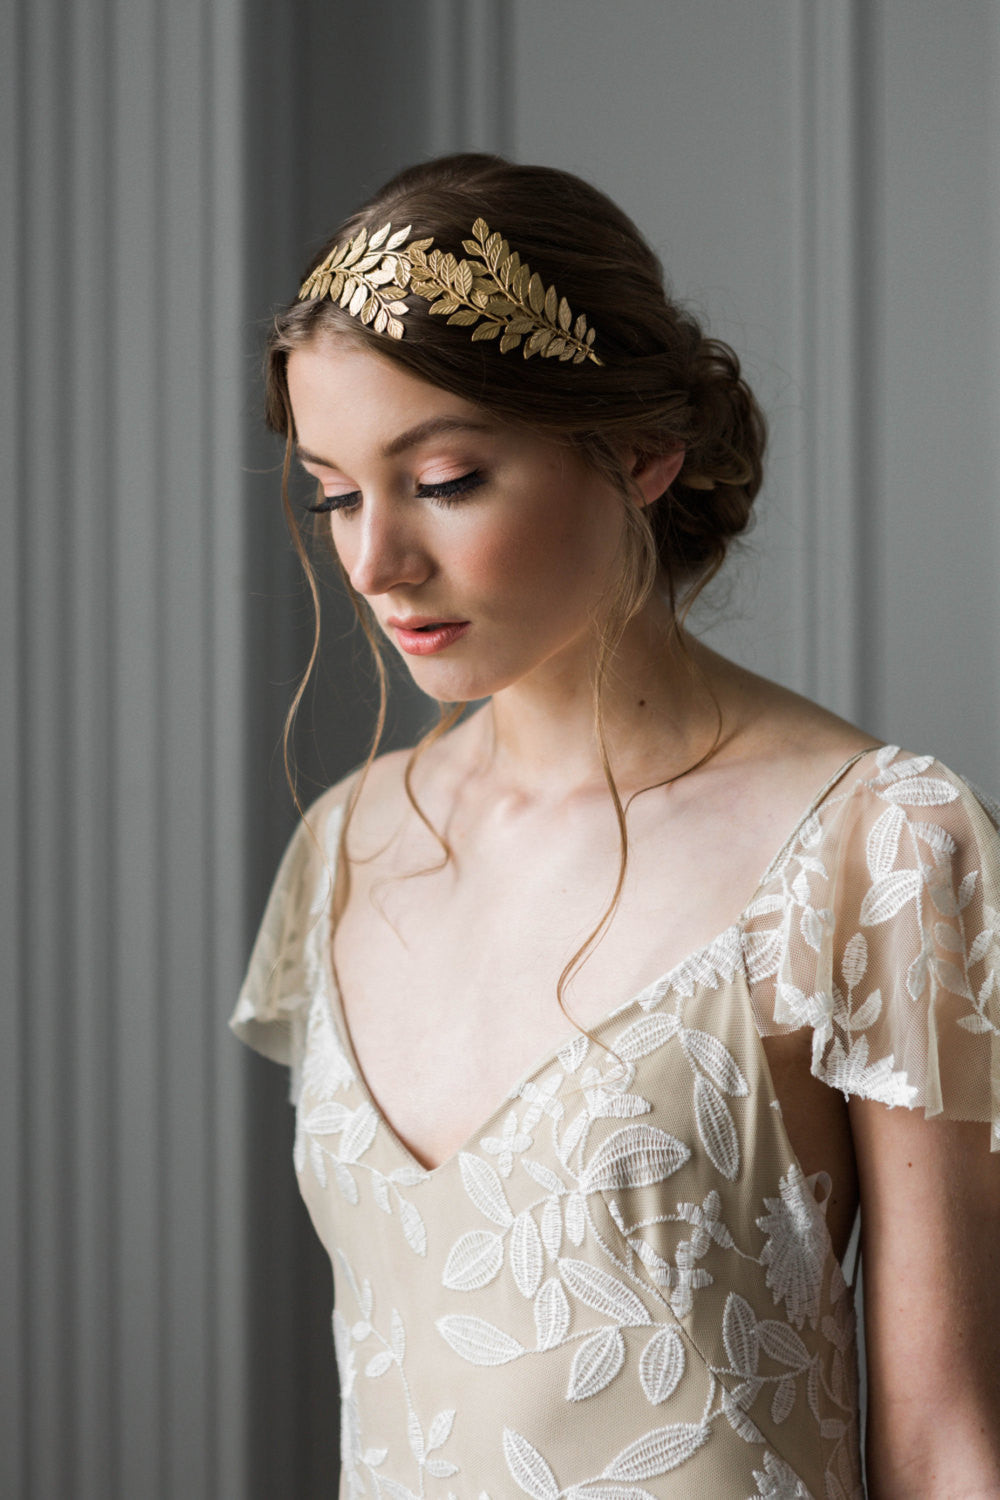 Bride wearing a gold leaf headpiece